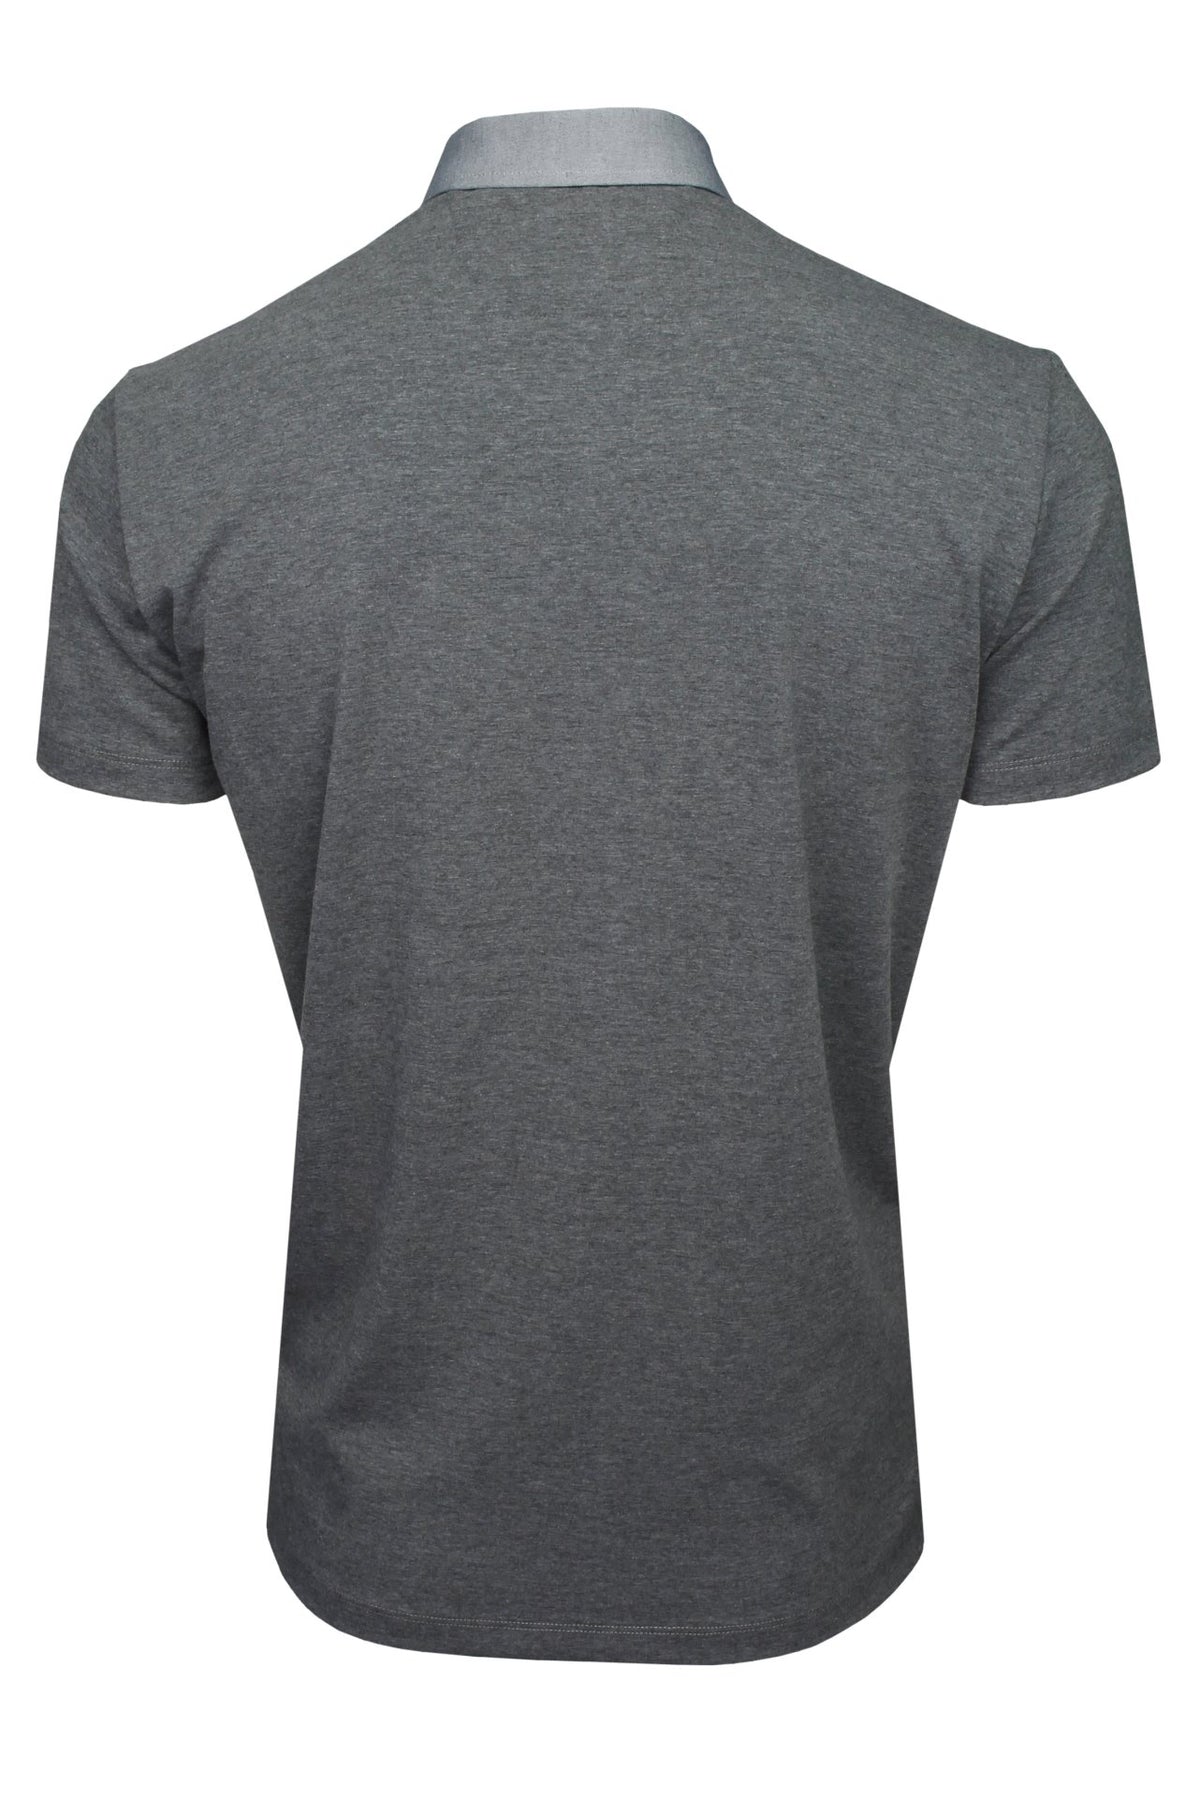 Xact Mens Polo Shirt with Short Sleeves and Button Down Collar, 03, Xp1076, Dark Grey